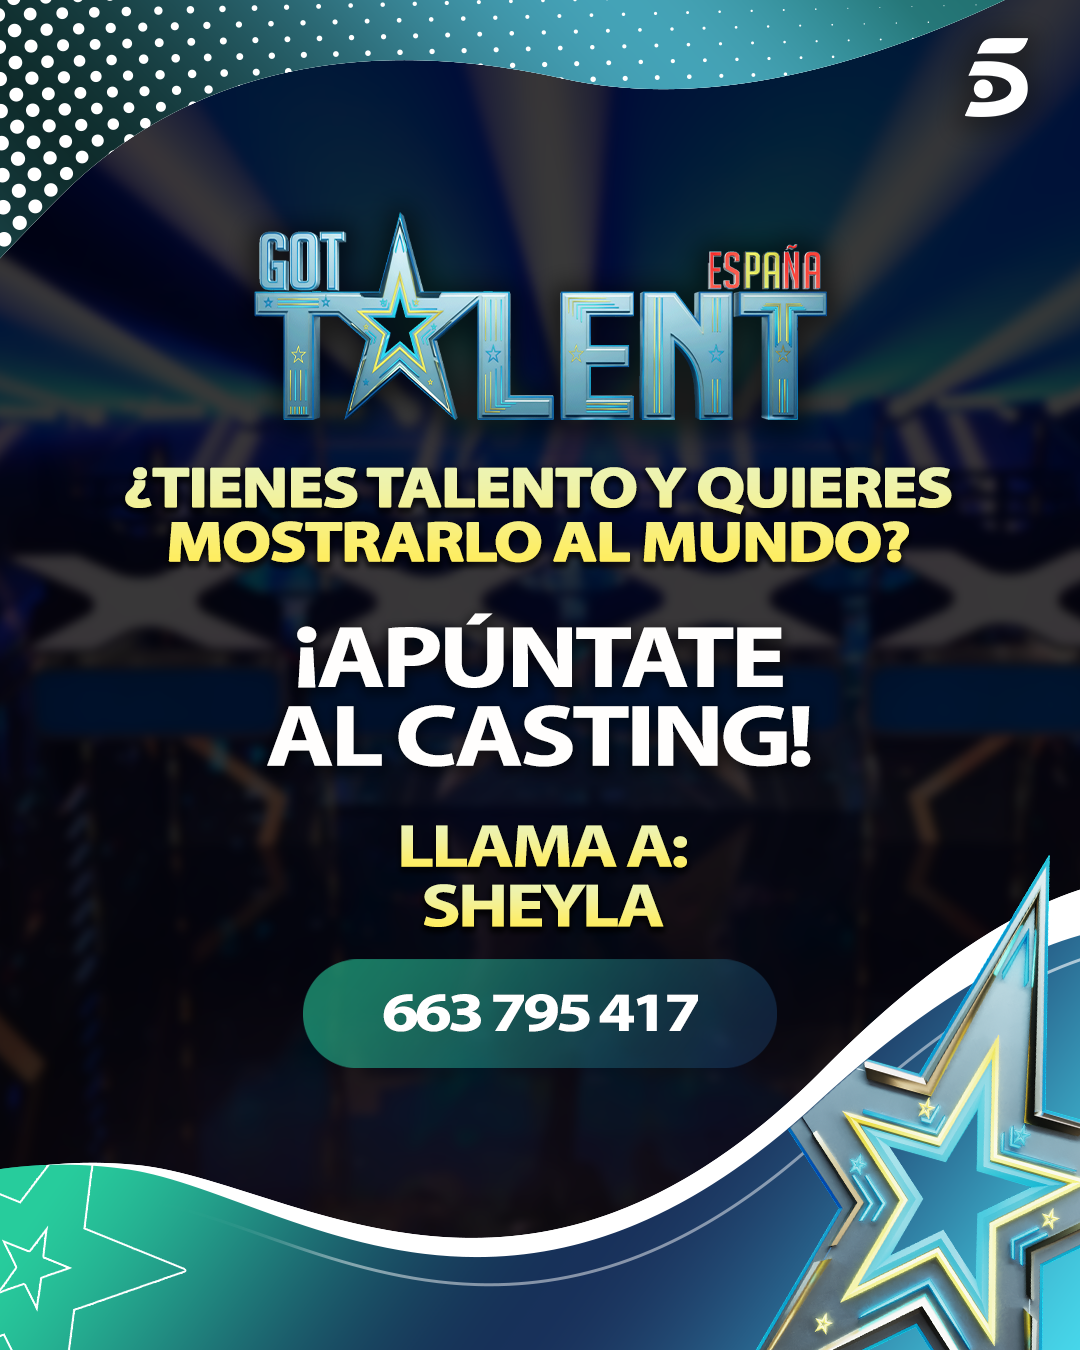 Got-Talent-Espana-T10-Facebook-X-Instagram-Feed-Casting-T10-Sheyla